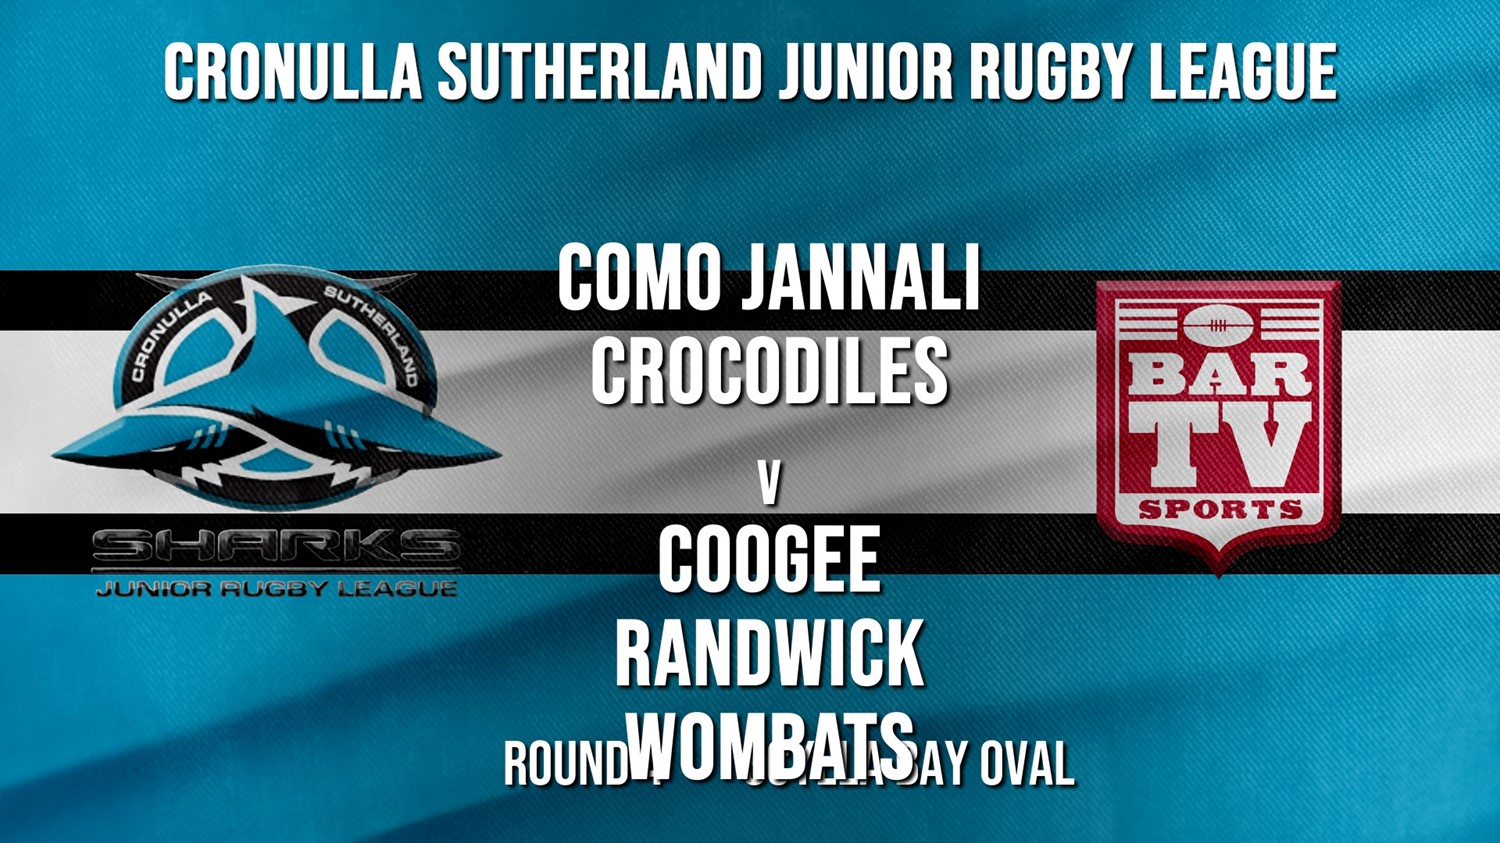 Cronulla JRL Round 4 - U/18 - Como Jannali Crocodiles v Coogee Randwick Wombats Minigame Slate Image